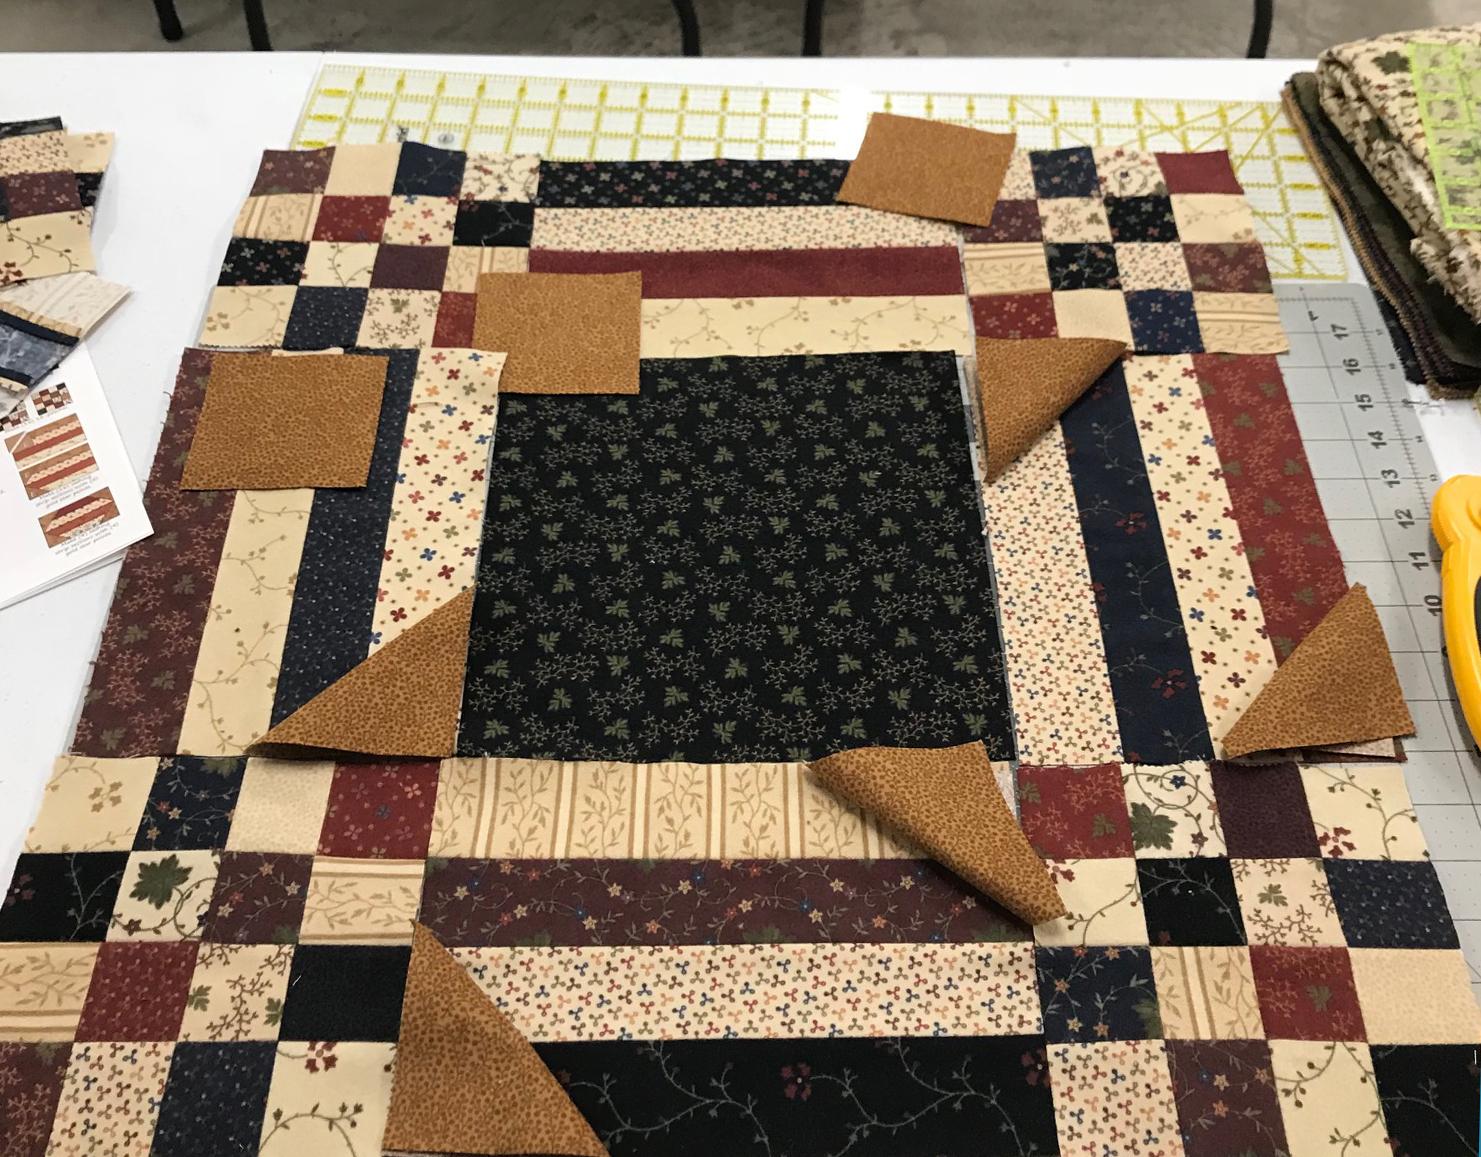 Flannel quilt in progress